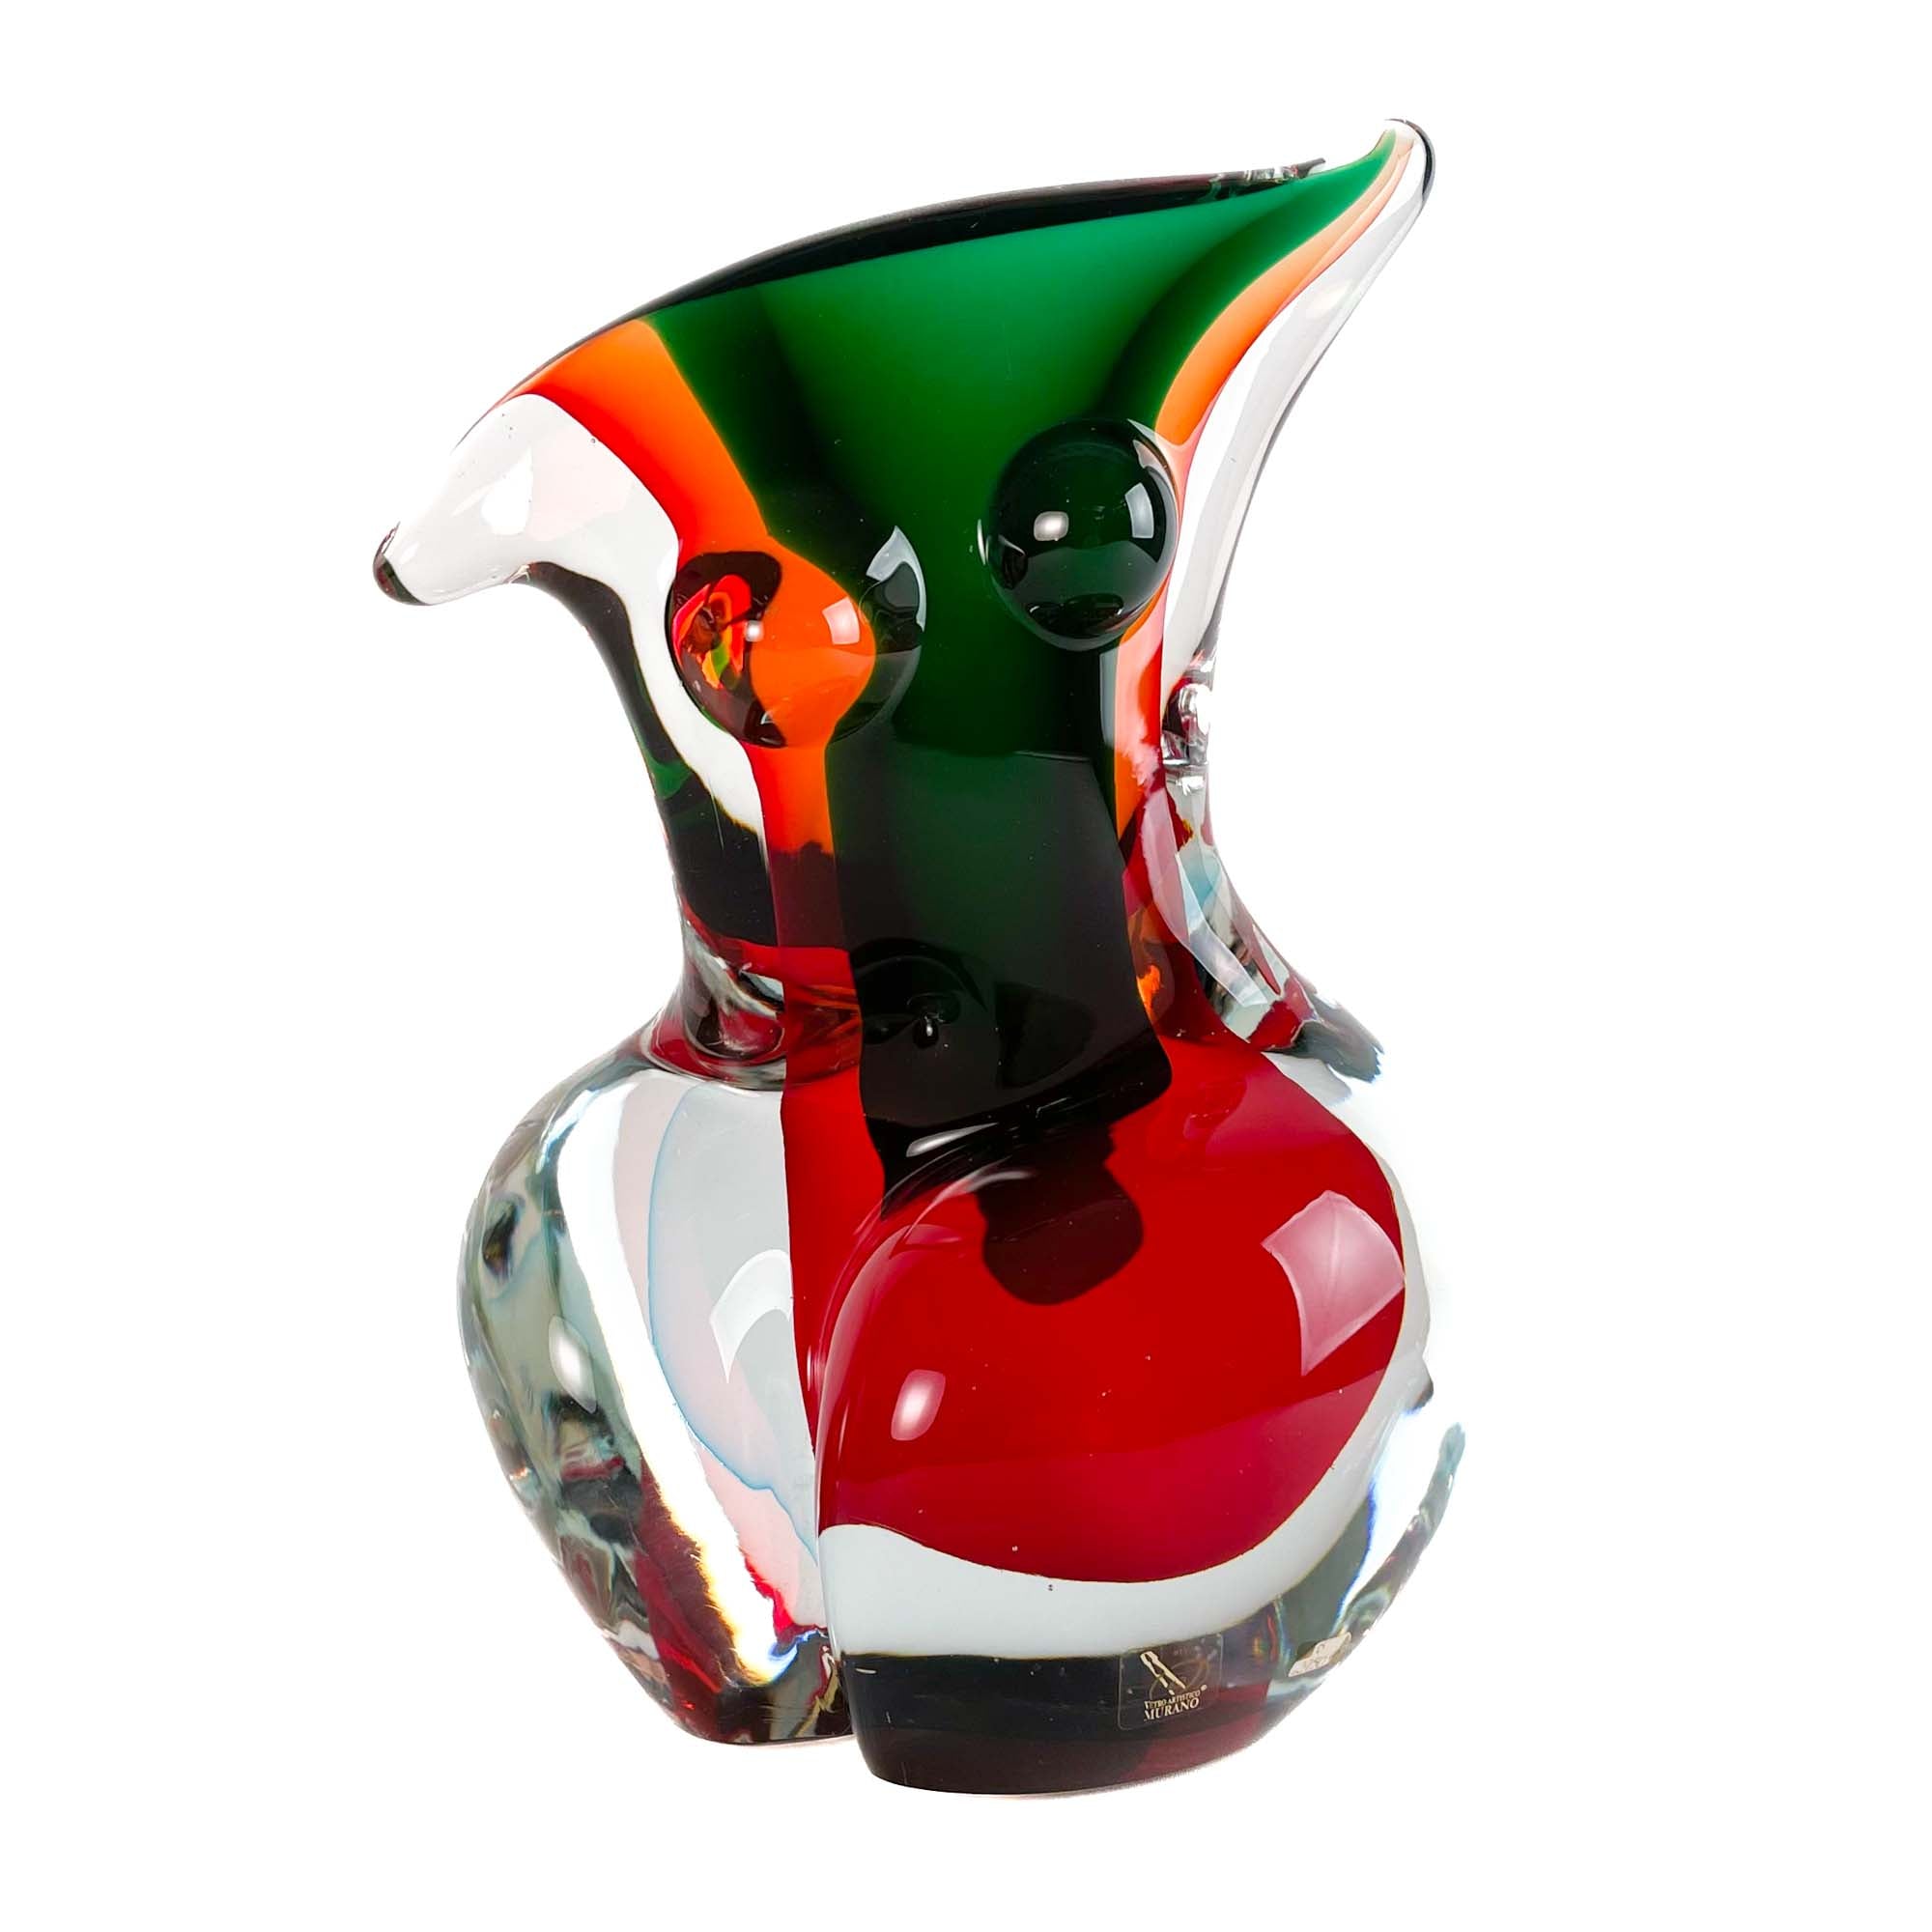 Torso Sbruffi Red and Green - Murano Glass